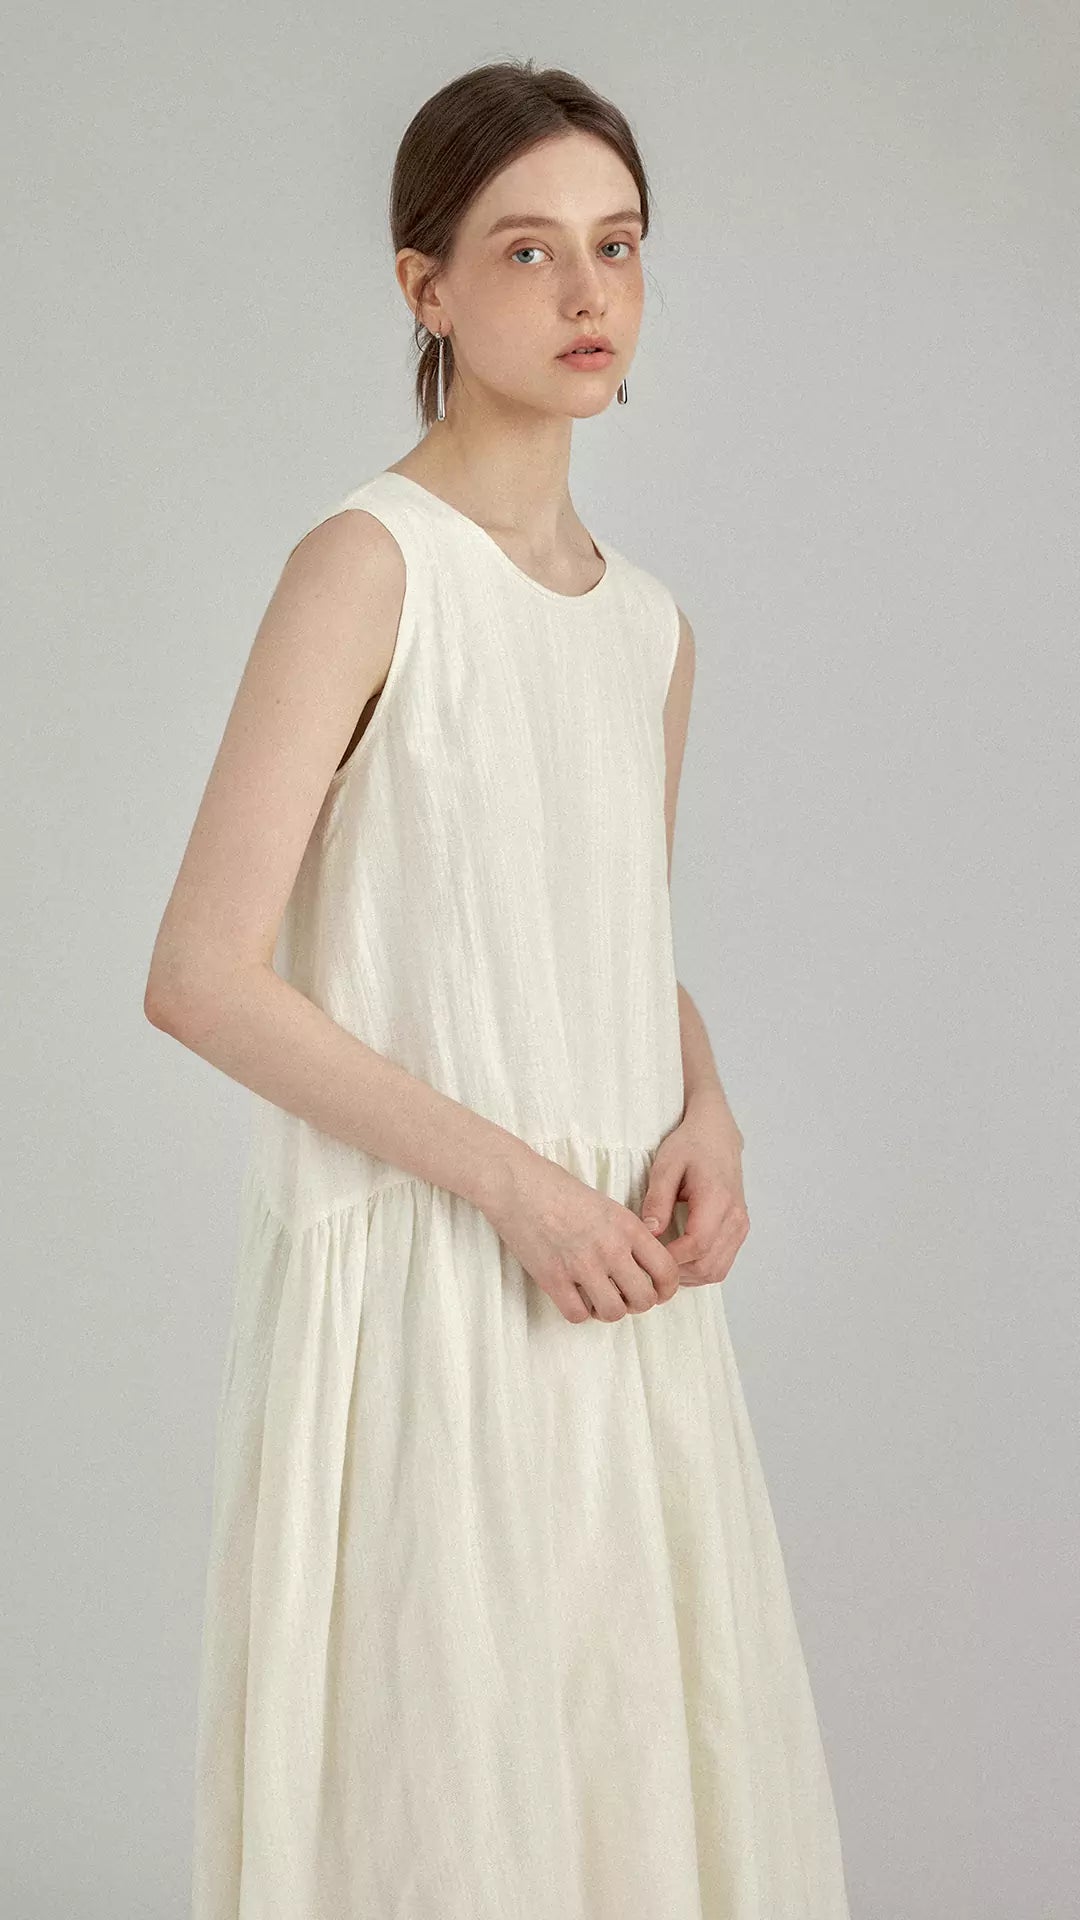 Simple Round-Neck Sleeveless Dress